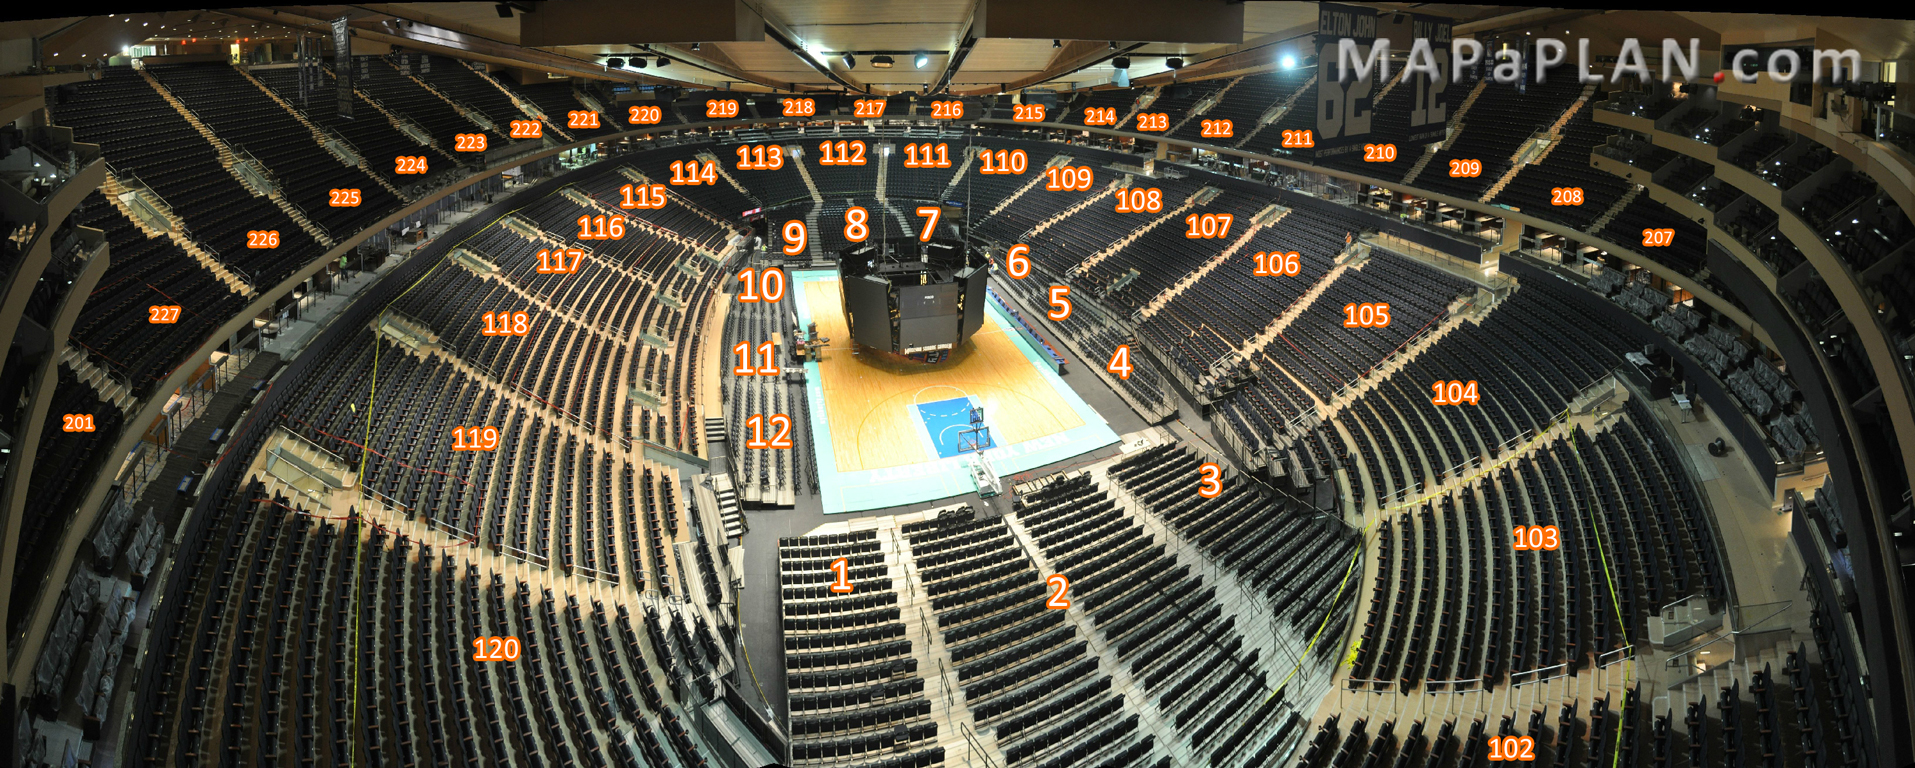 Madison Square Garden Seating Chart Interactive 3d Panoramic Photo Mapaplan Com